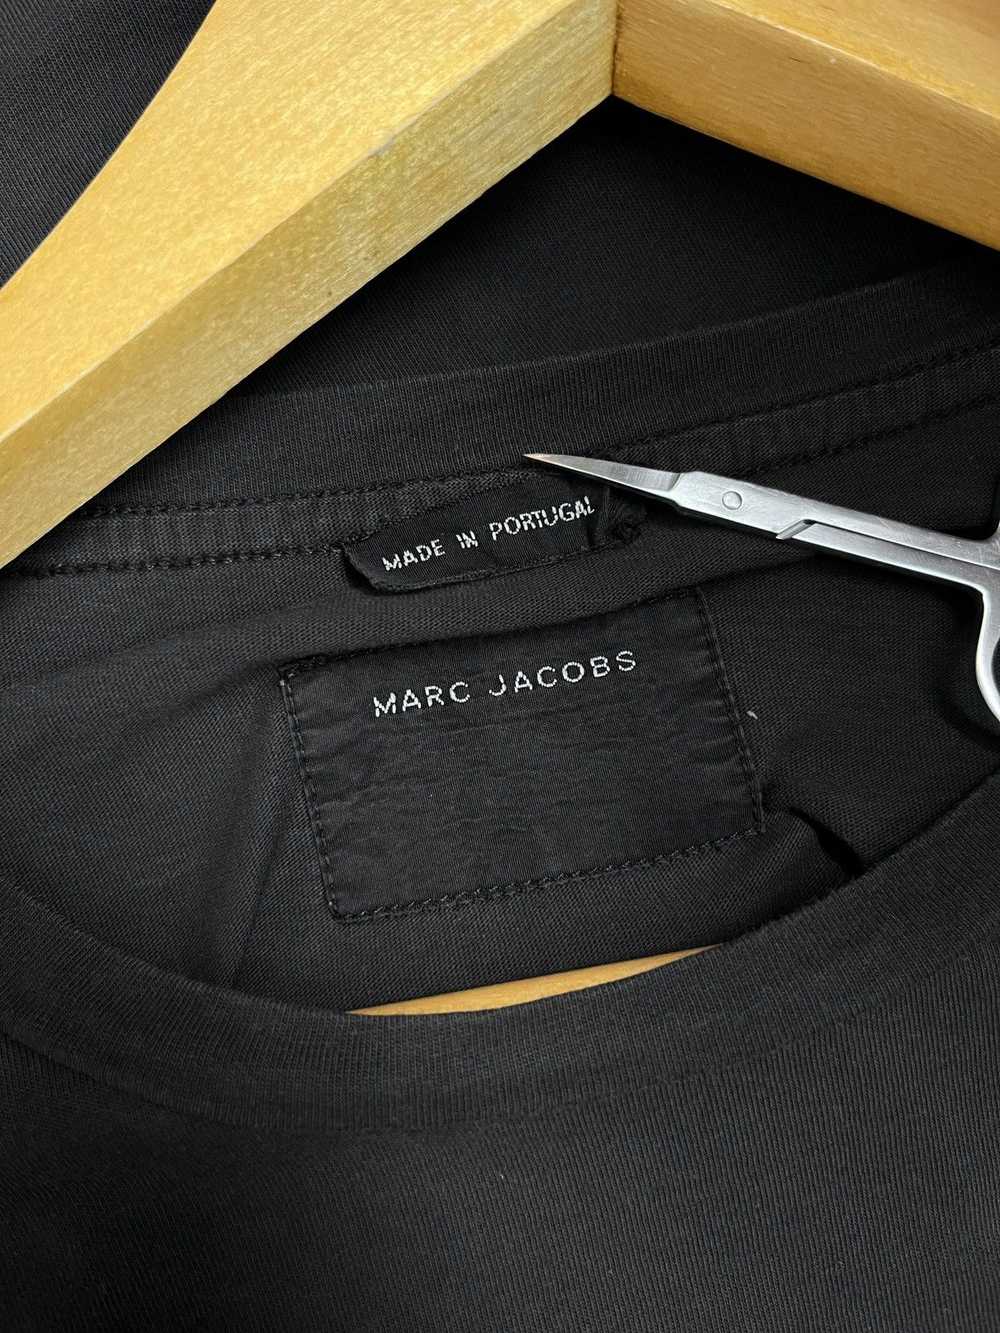 Marc Jacobs Marc Jacobs T-Shirt - image 4